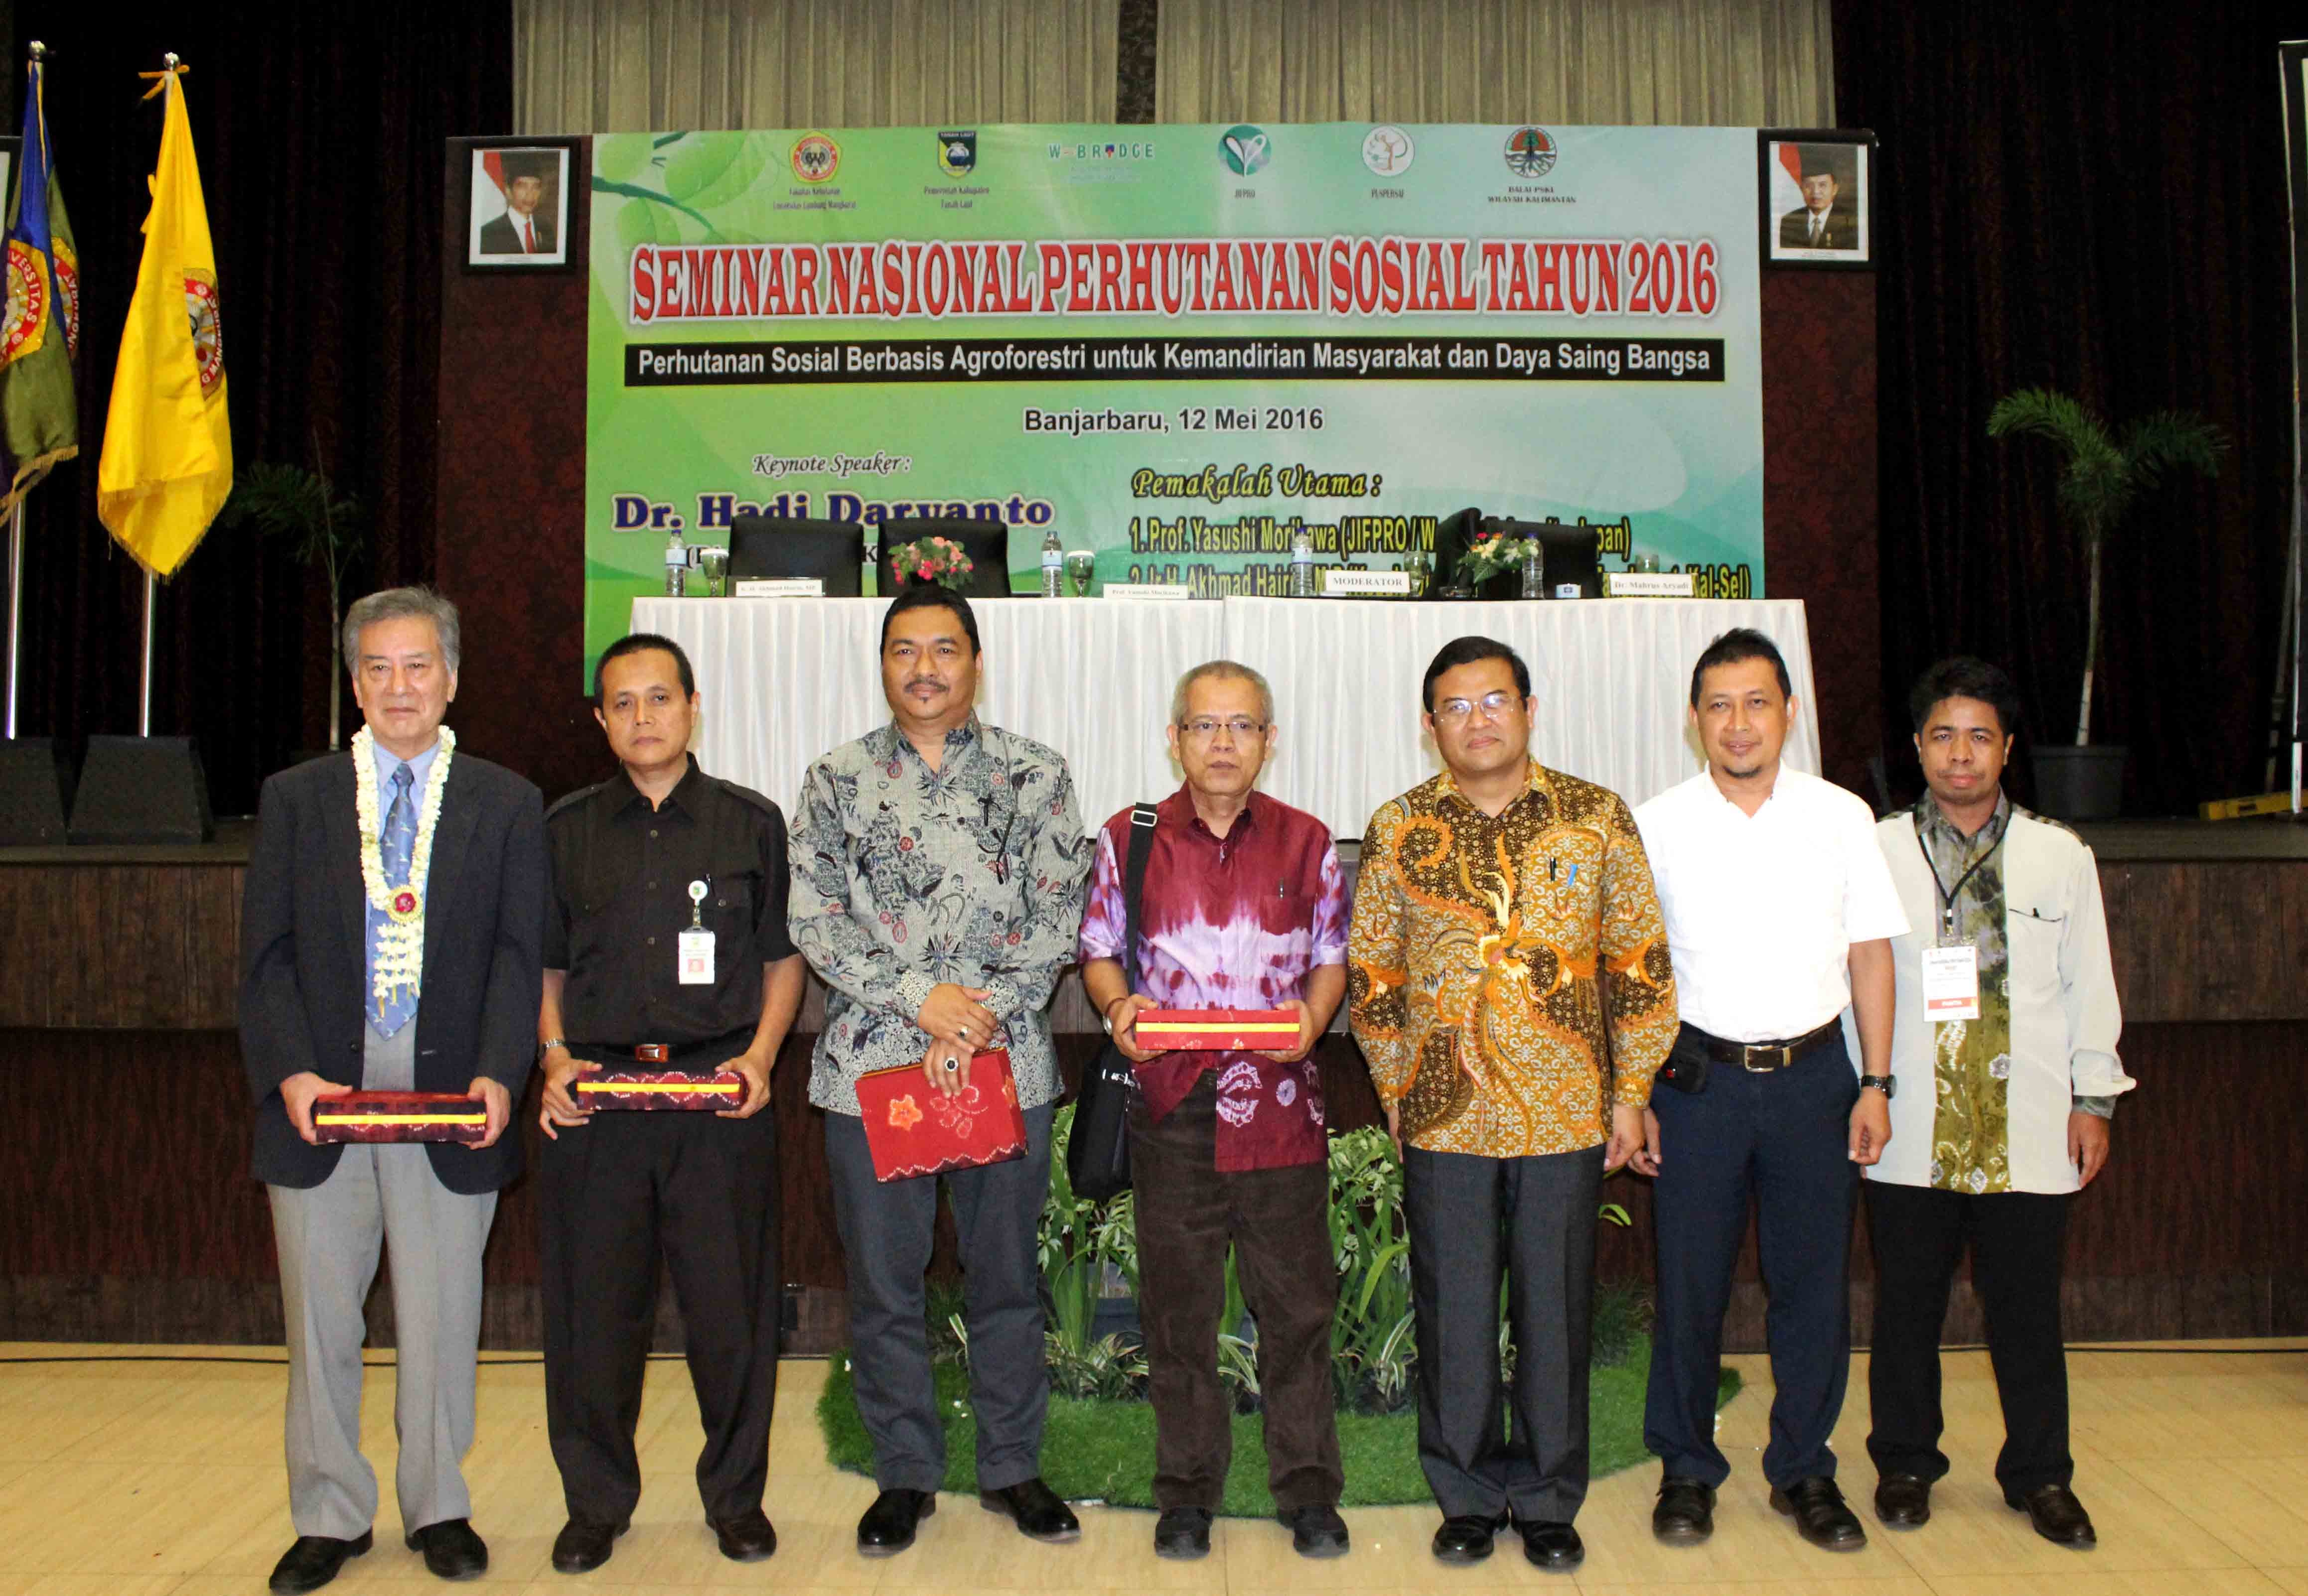 Banjarbaru Rabu 12 05 2016 bertempat di Hotel Roditha Fakultas Kehutanan Universitas Lambung Mangkurat ULM menggelar seminar nasional dengan tema “